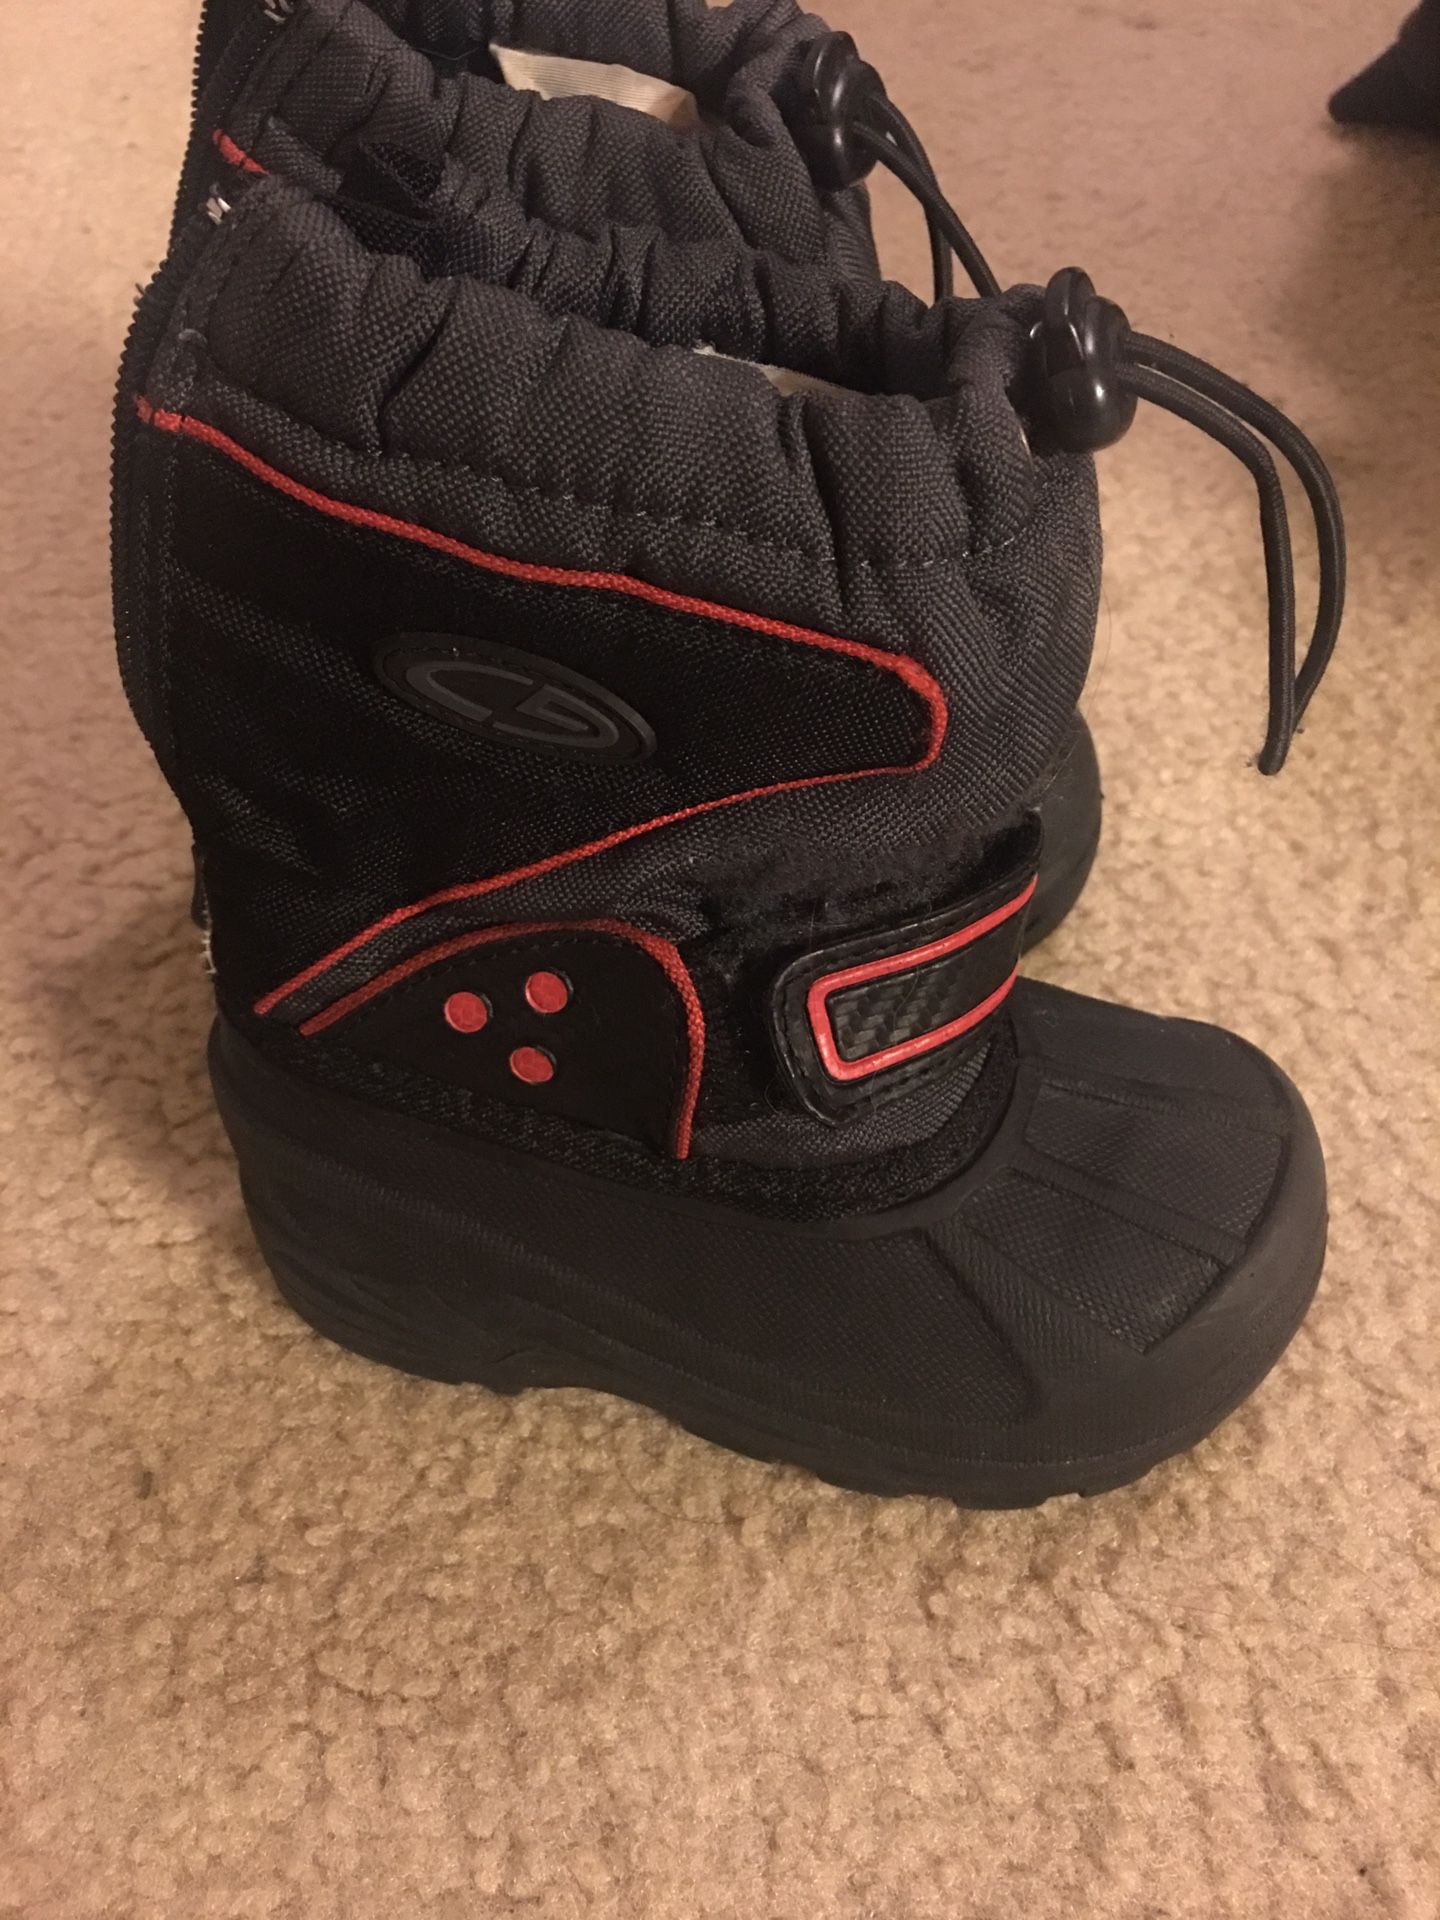 Little kid size 7 snow boots